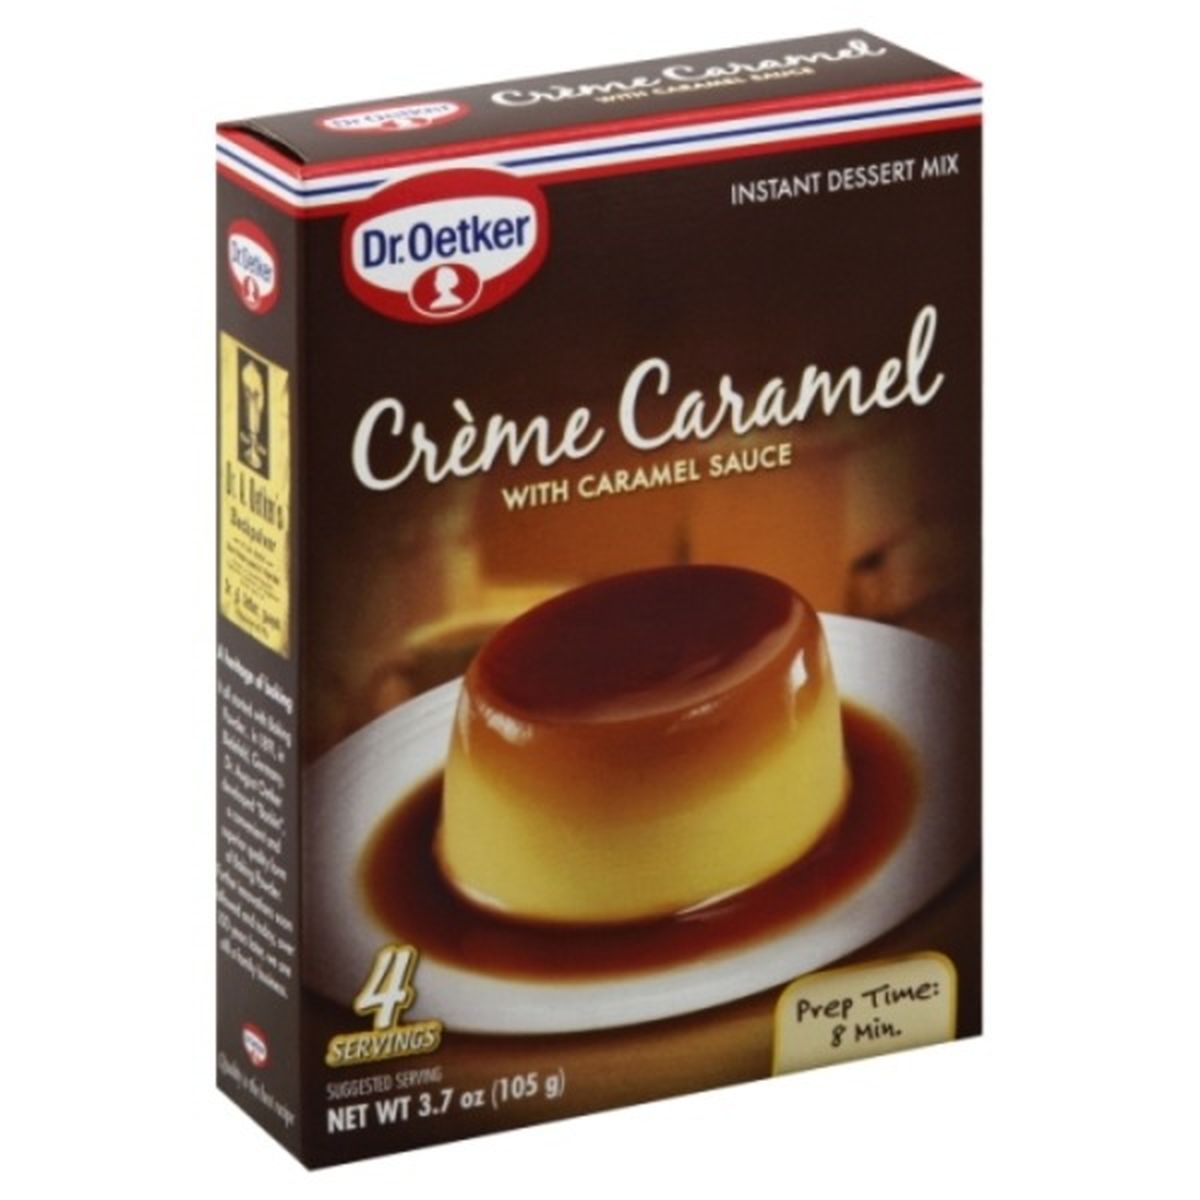 Calories in Dr. Oetker Instant Dessert Mix, Creme Caramel